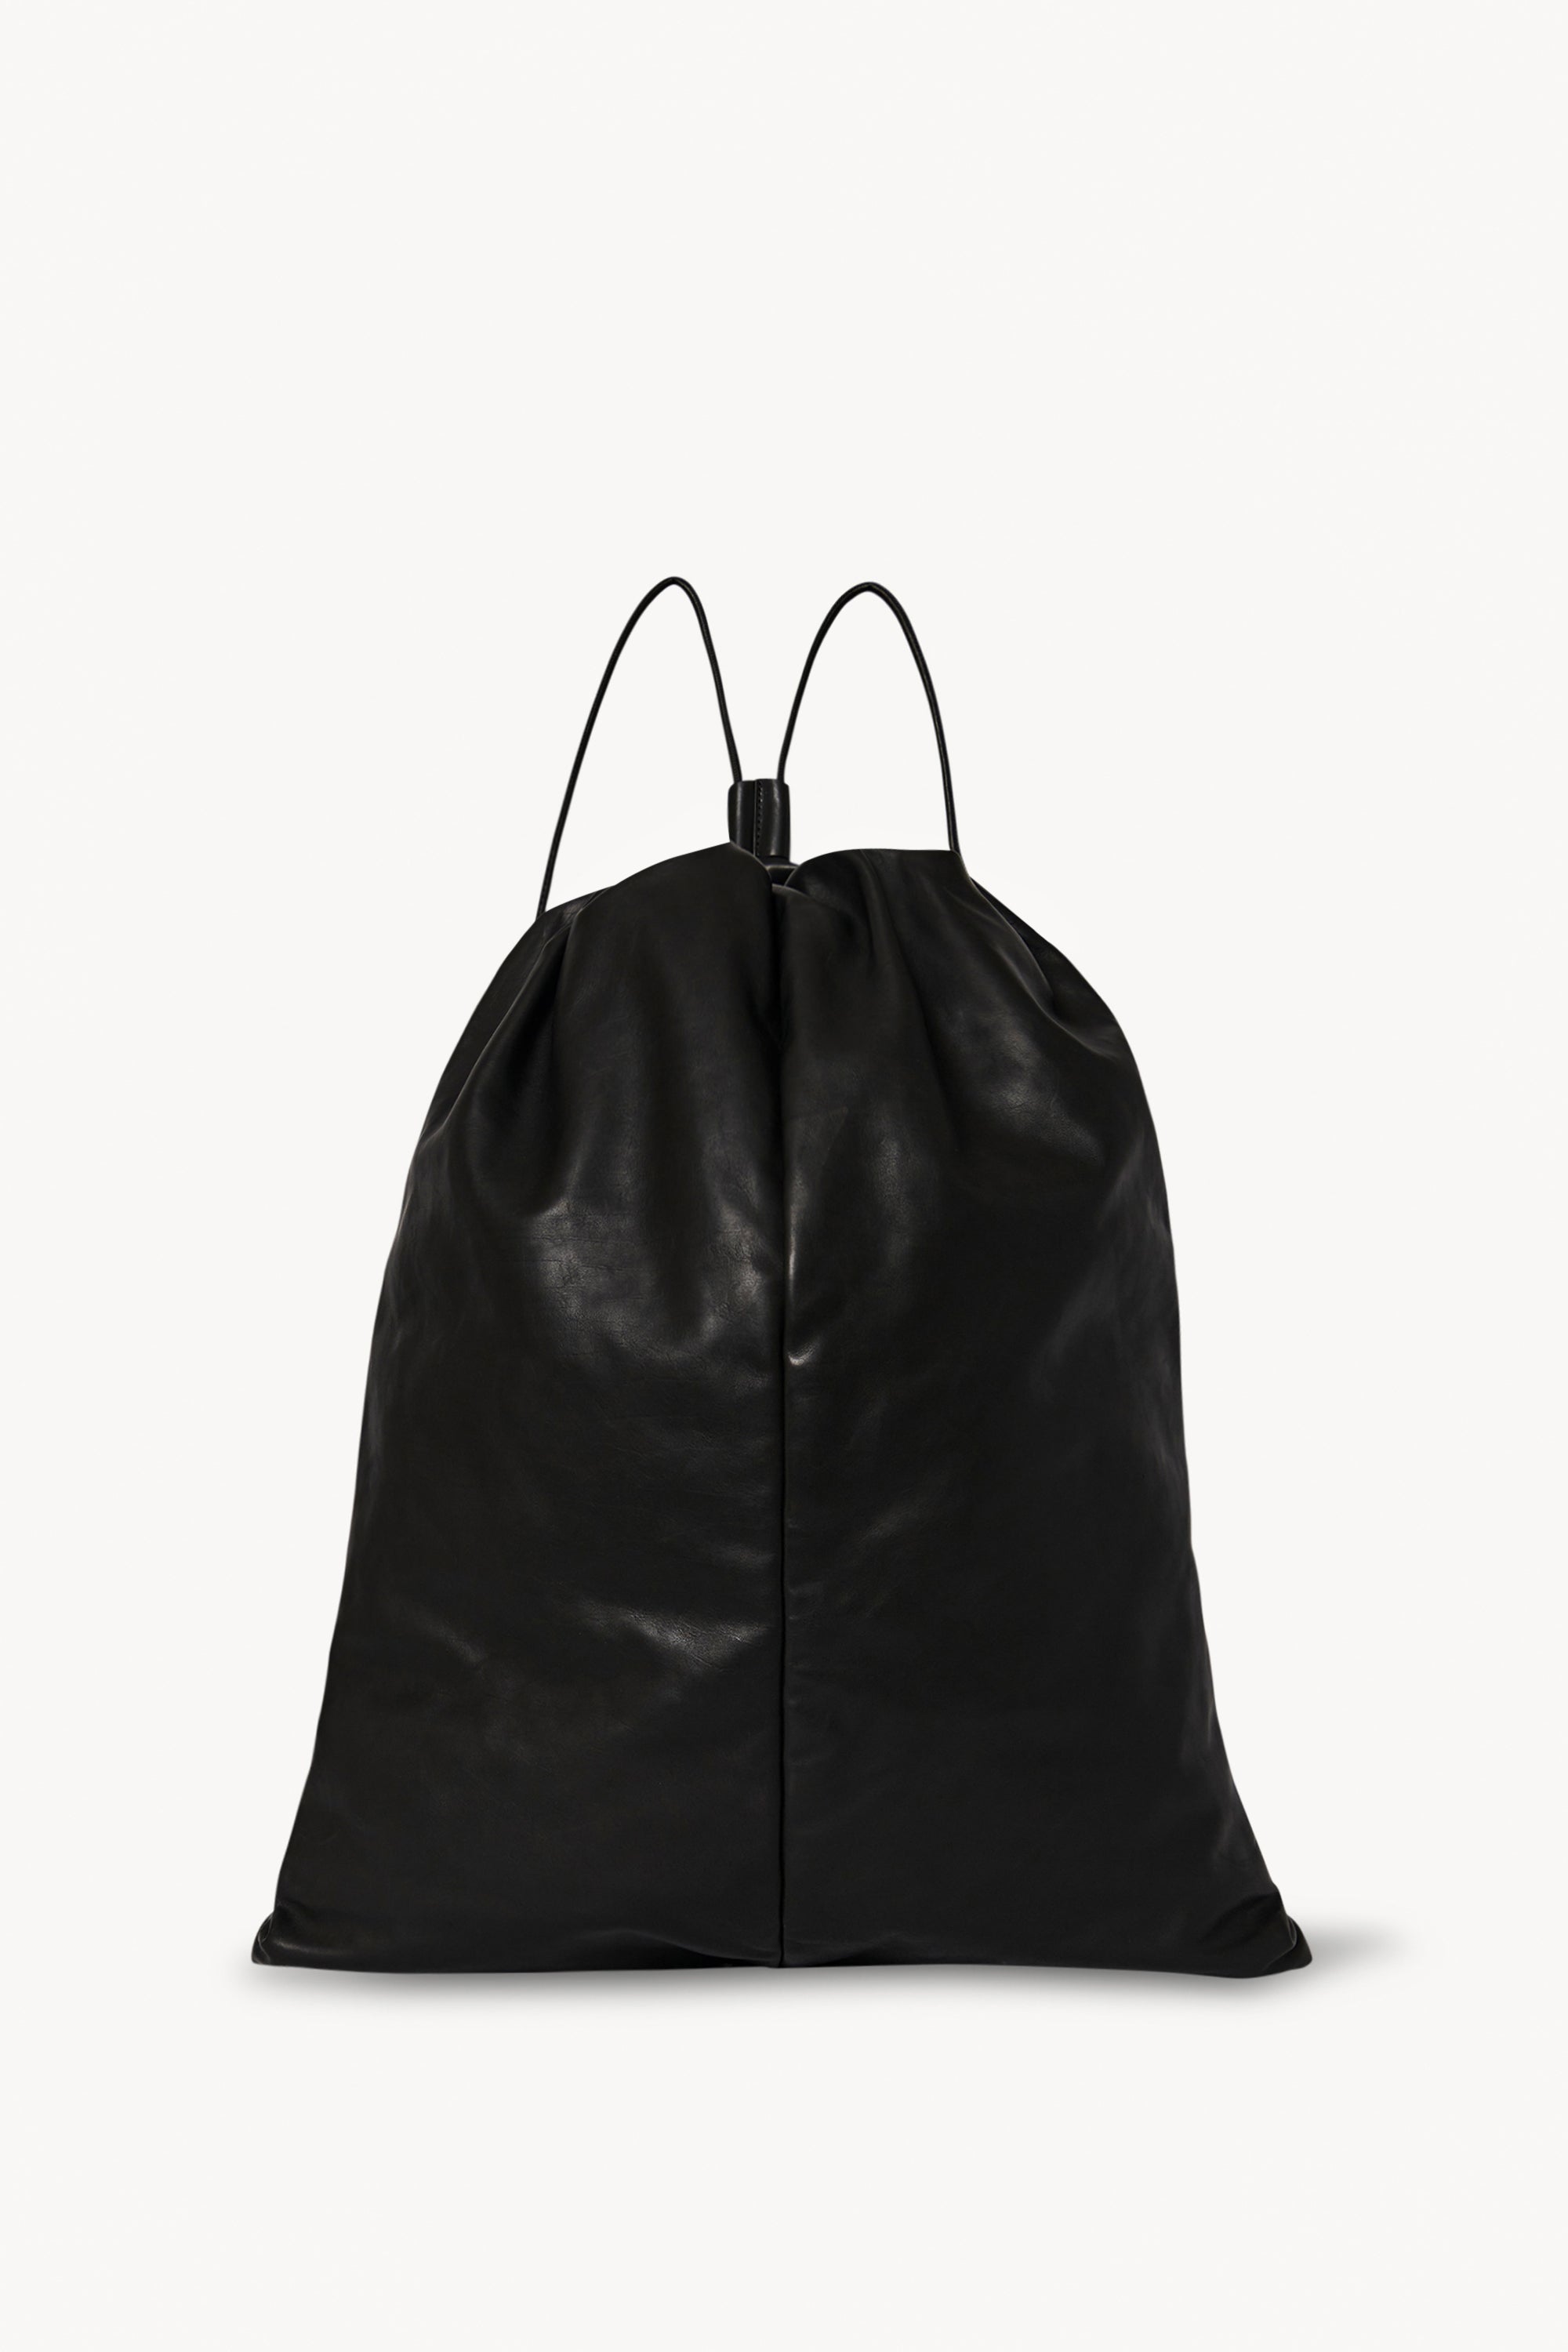 chanel black bucket bag leather